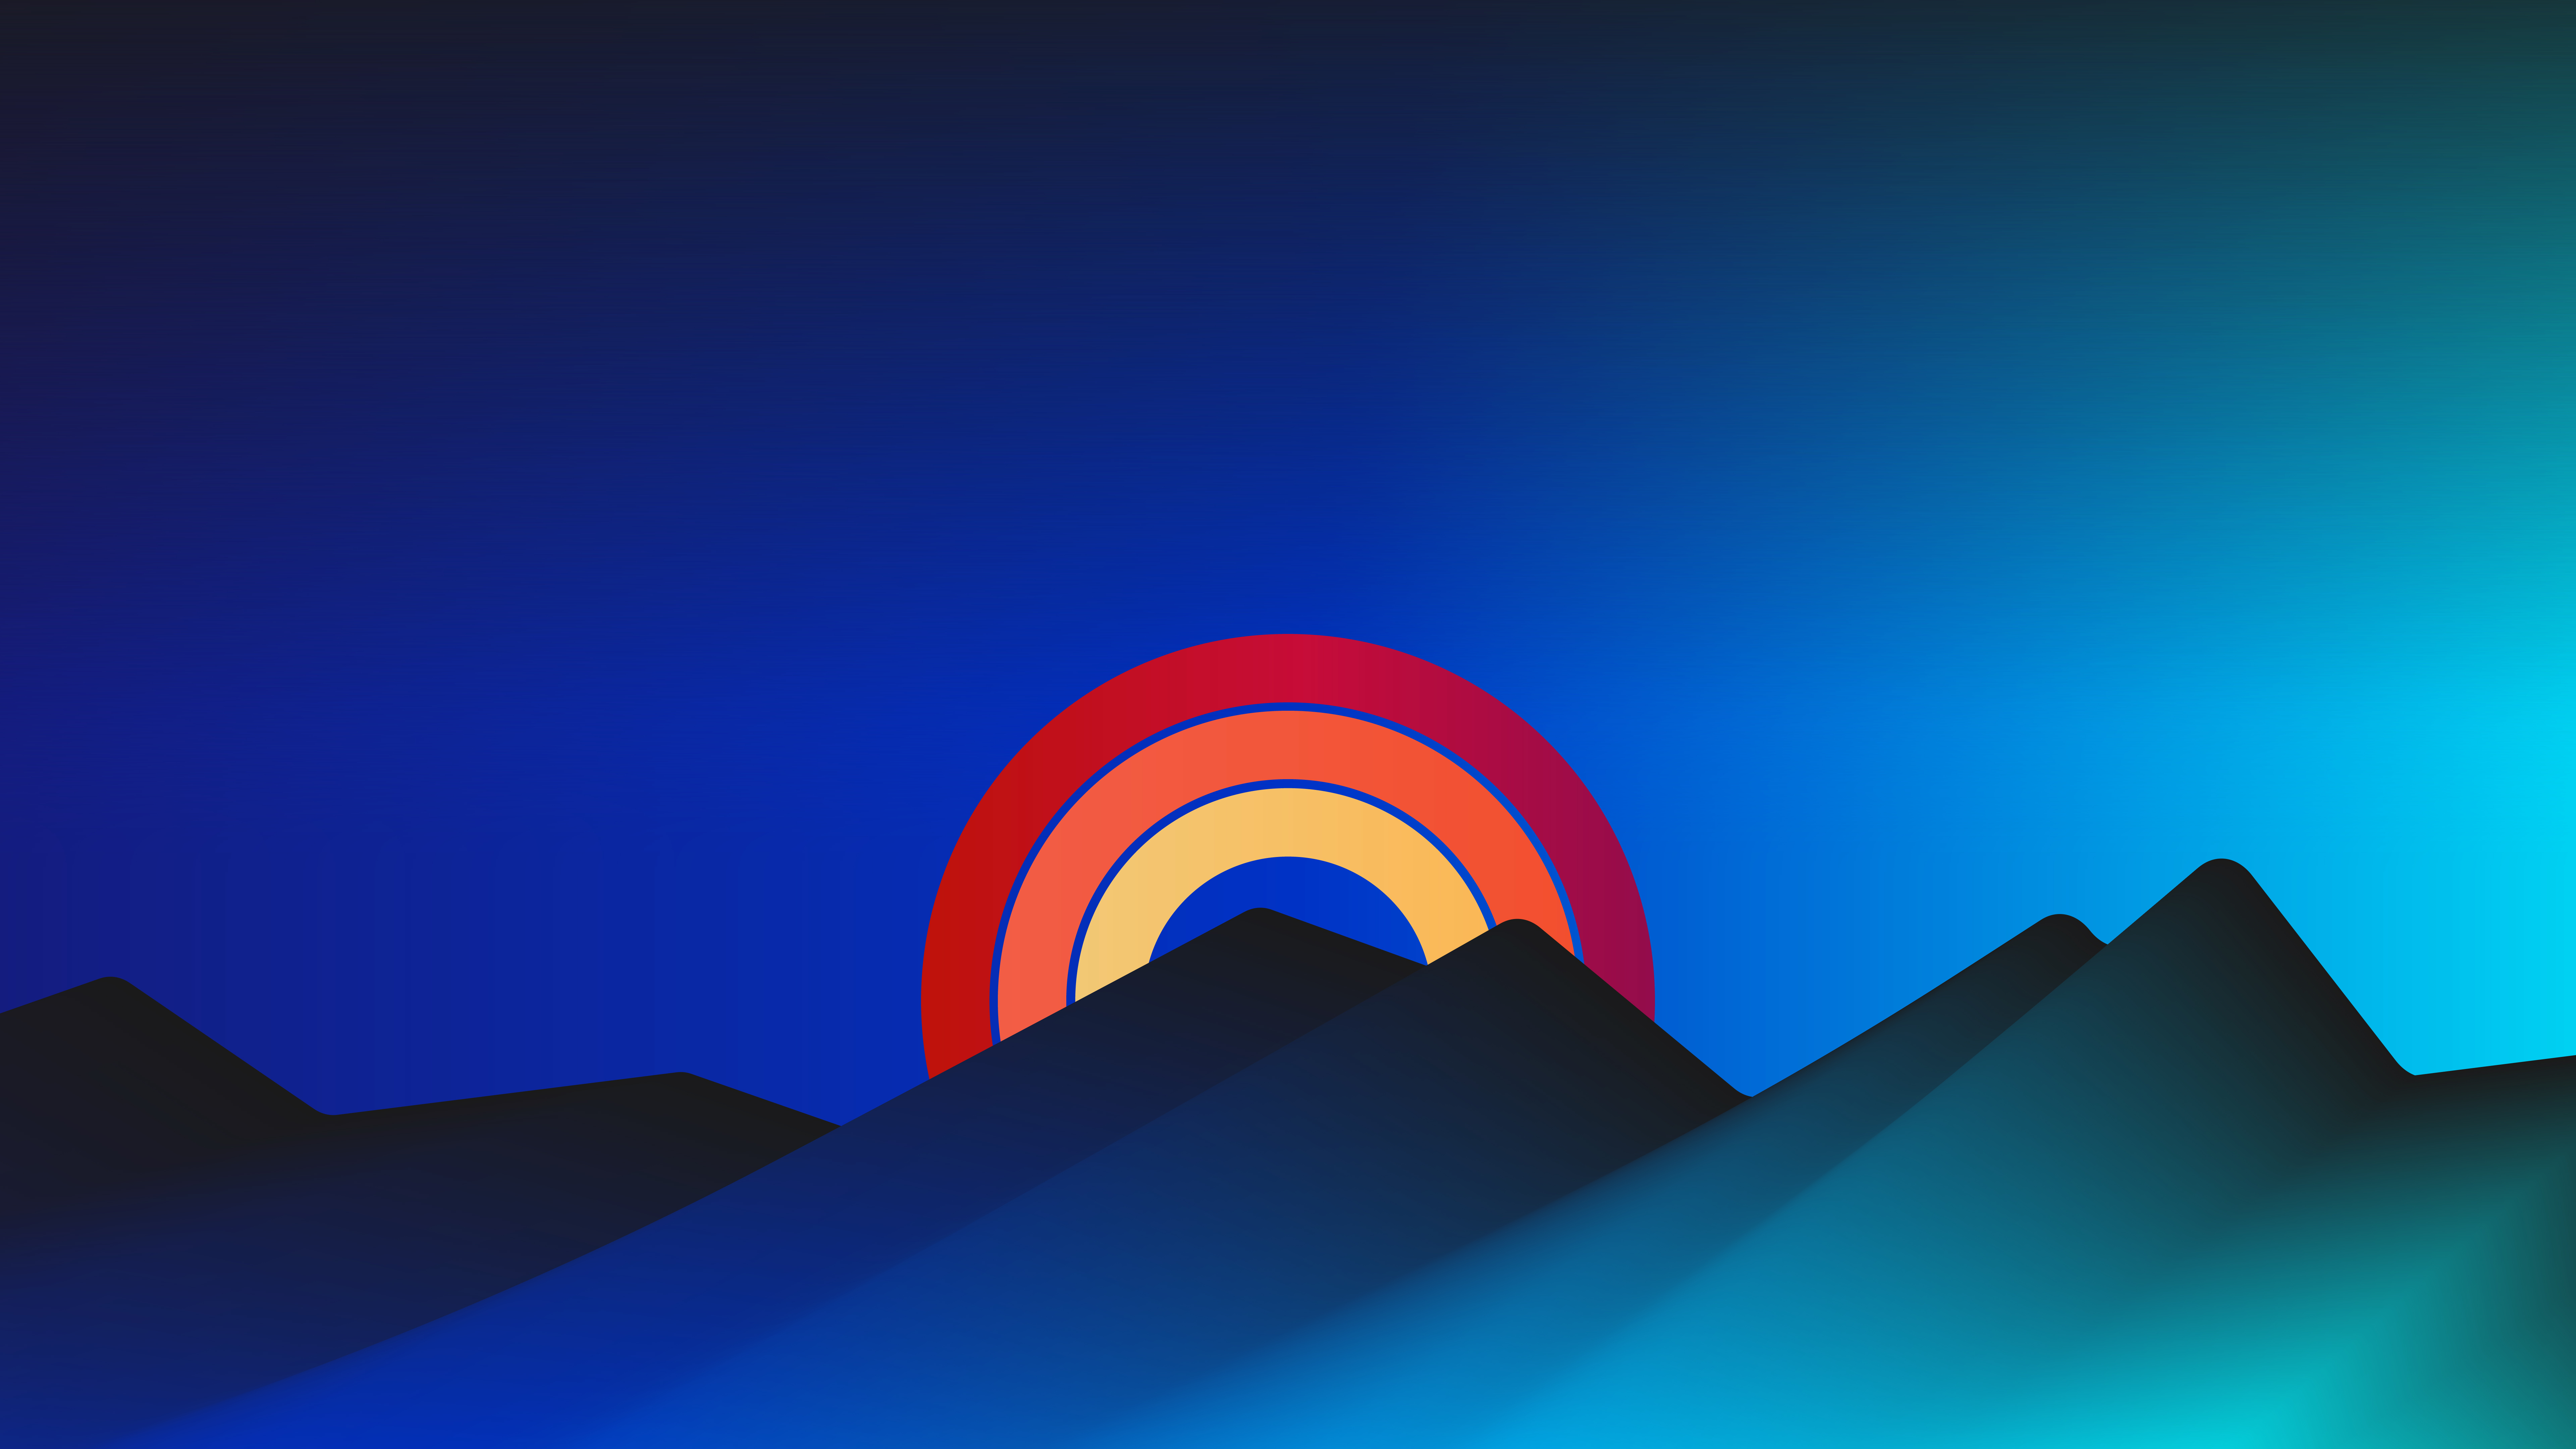 Download wallpaper 7680x4320 mountain, abstract, rainbow stripes, minimal 8k  wallpaper, 7680x4320 8k background, 28678